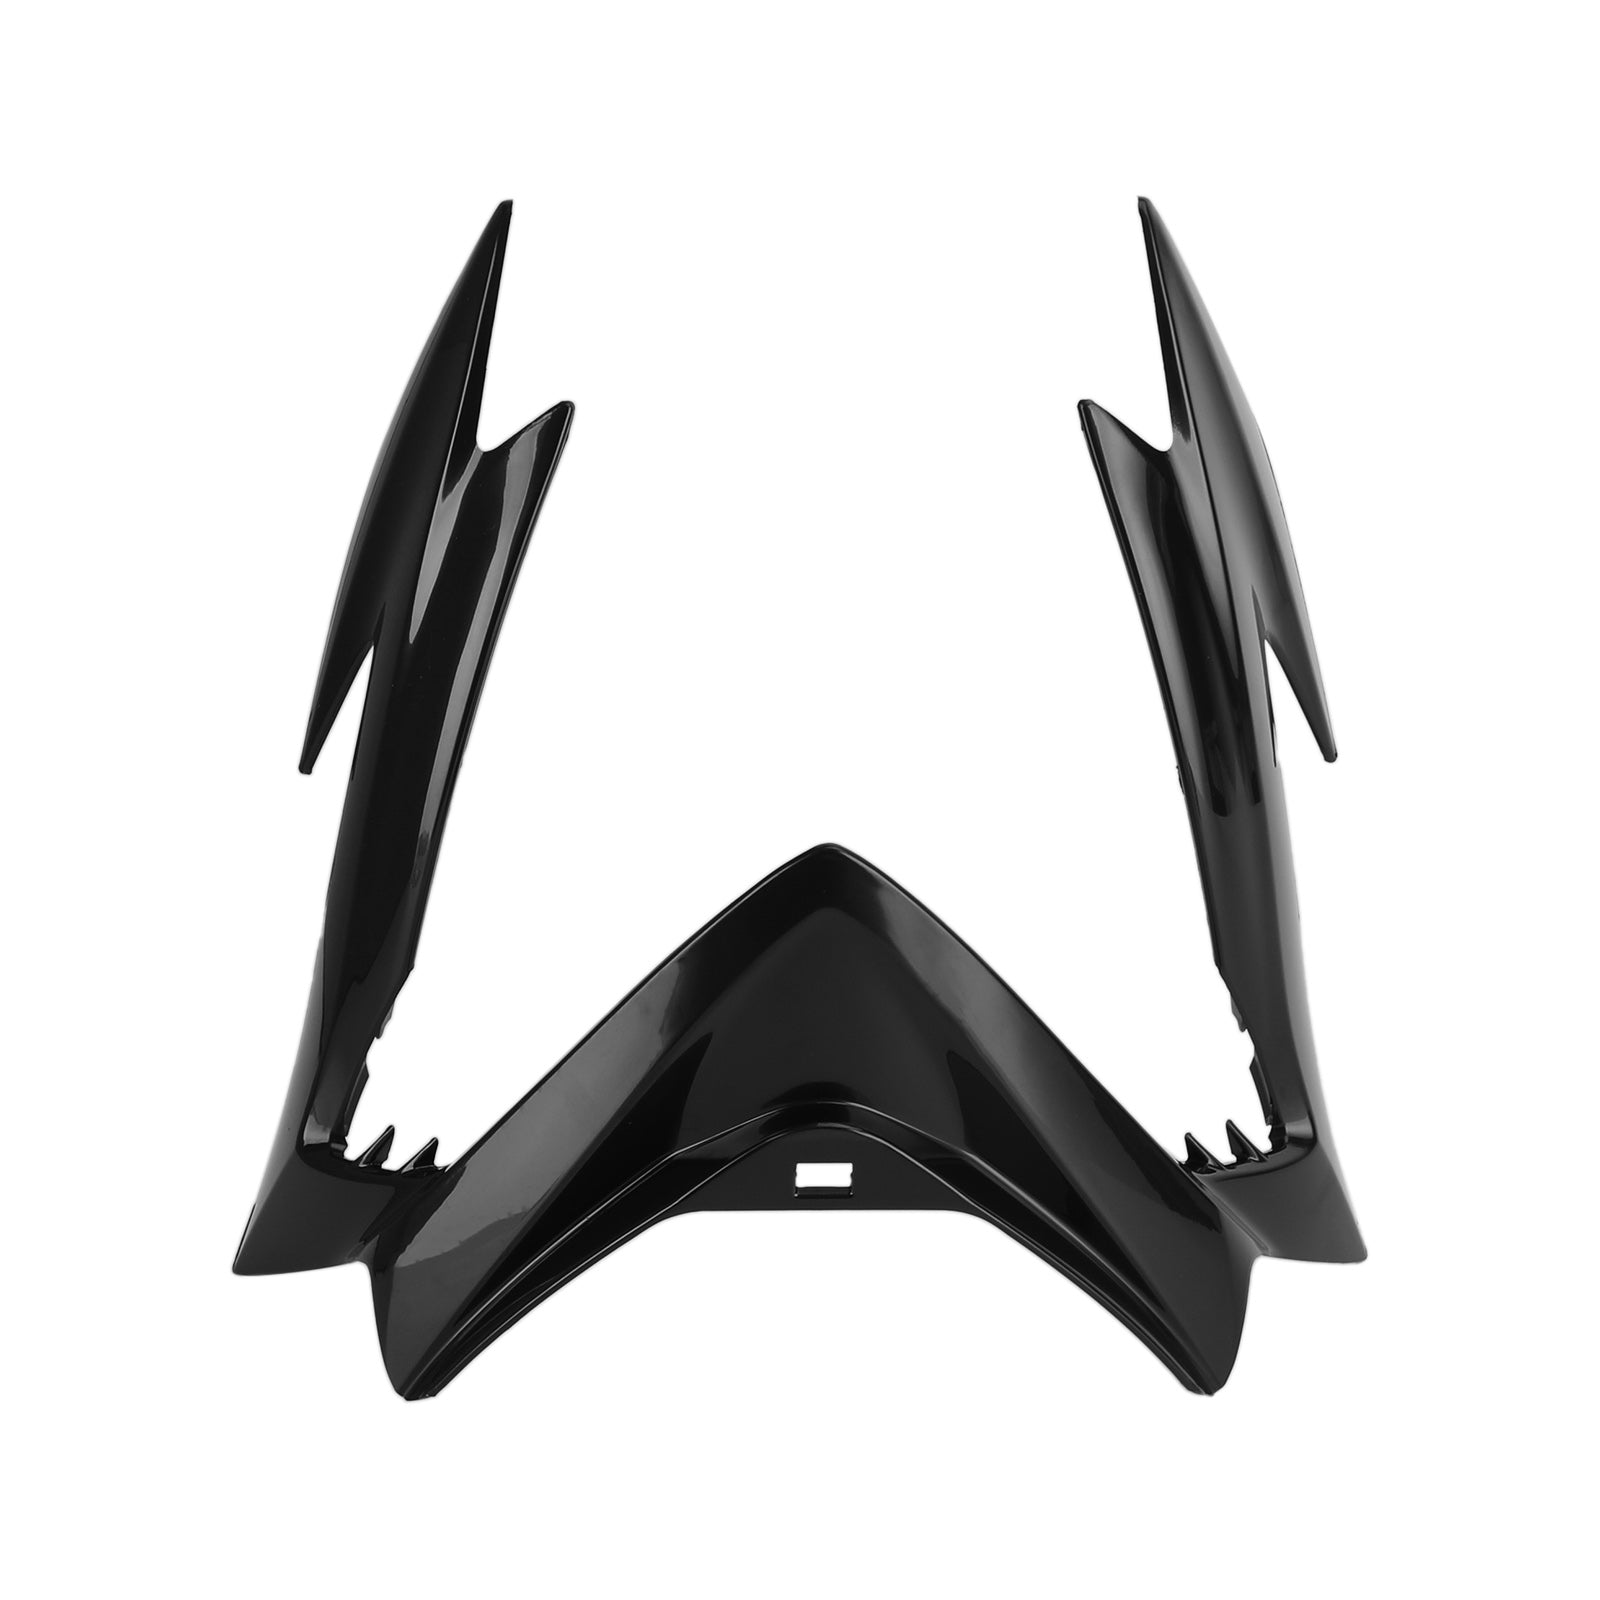 Unpainted Front Nose Headlight Cover Fairing For Suzuki GSX-S 1000 2015-2020